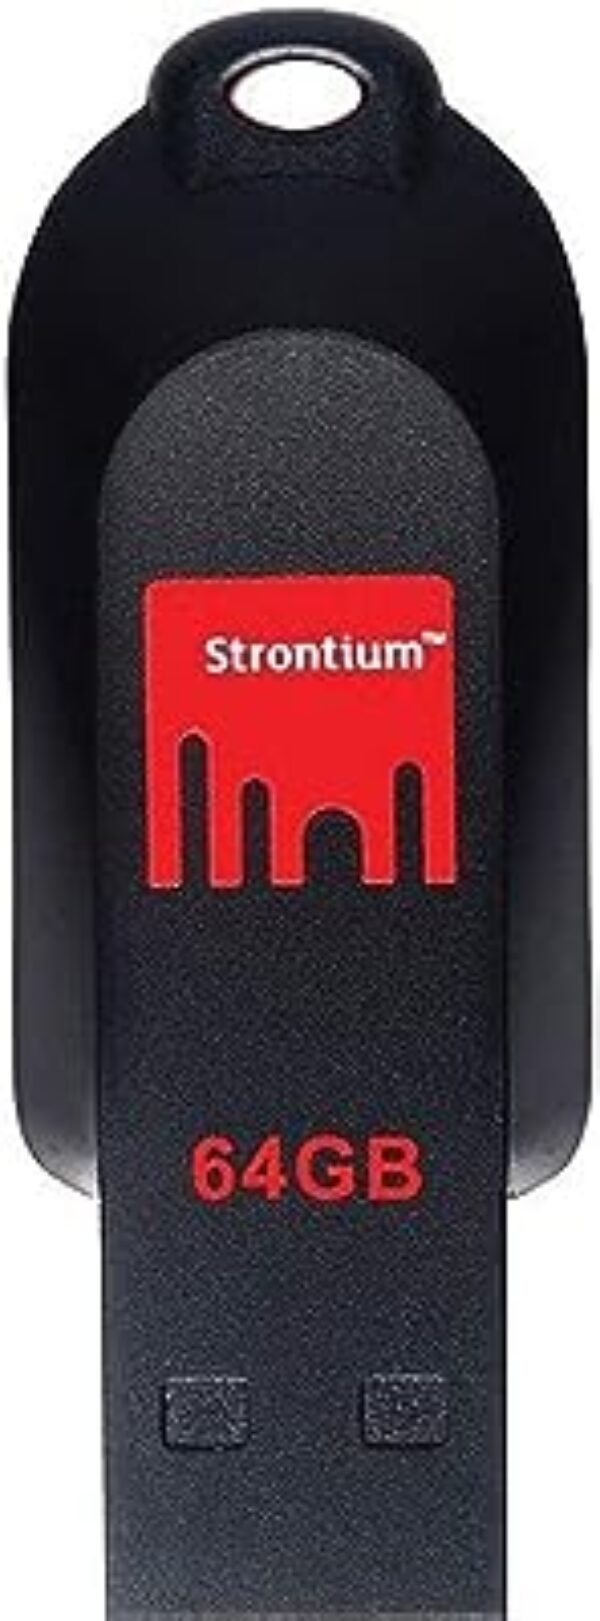 Strontium Pollex USB 64GB Flash Drive